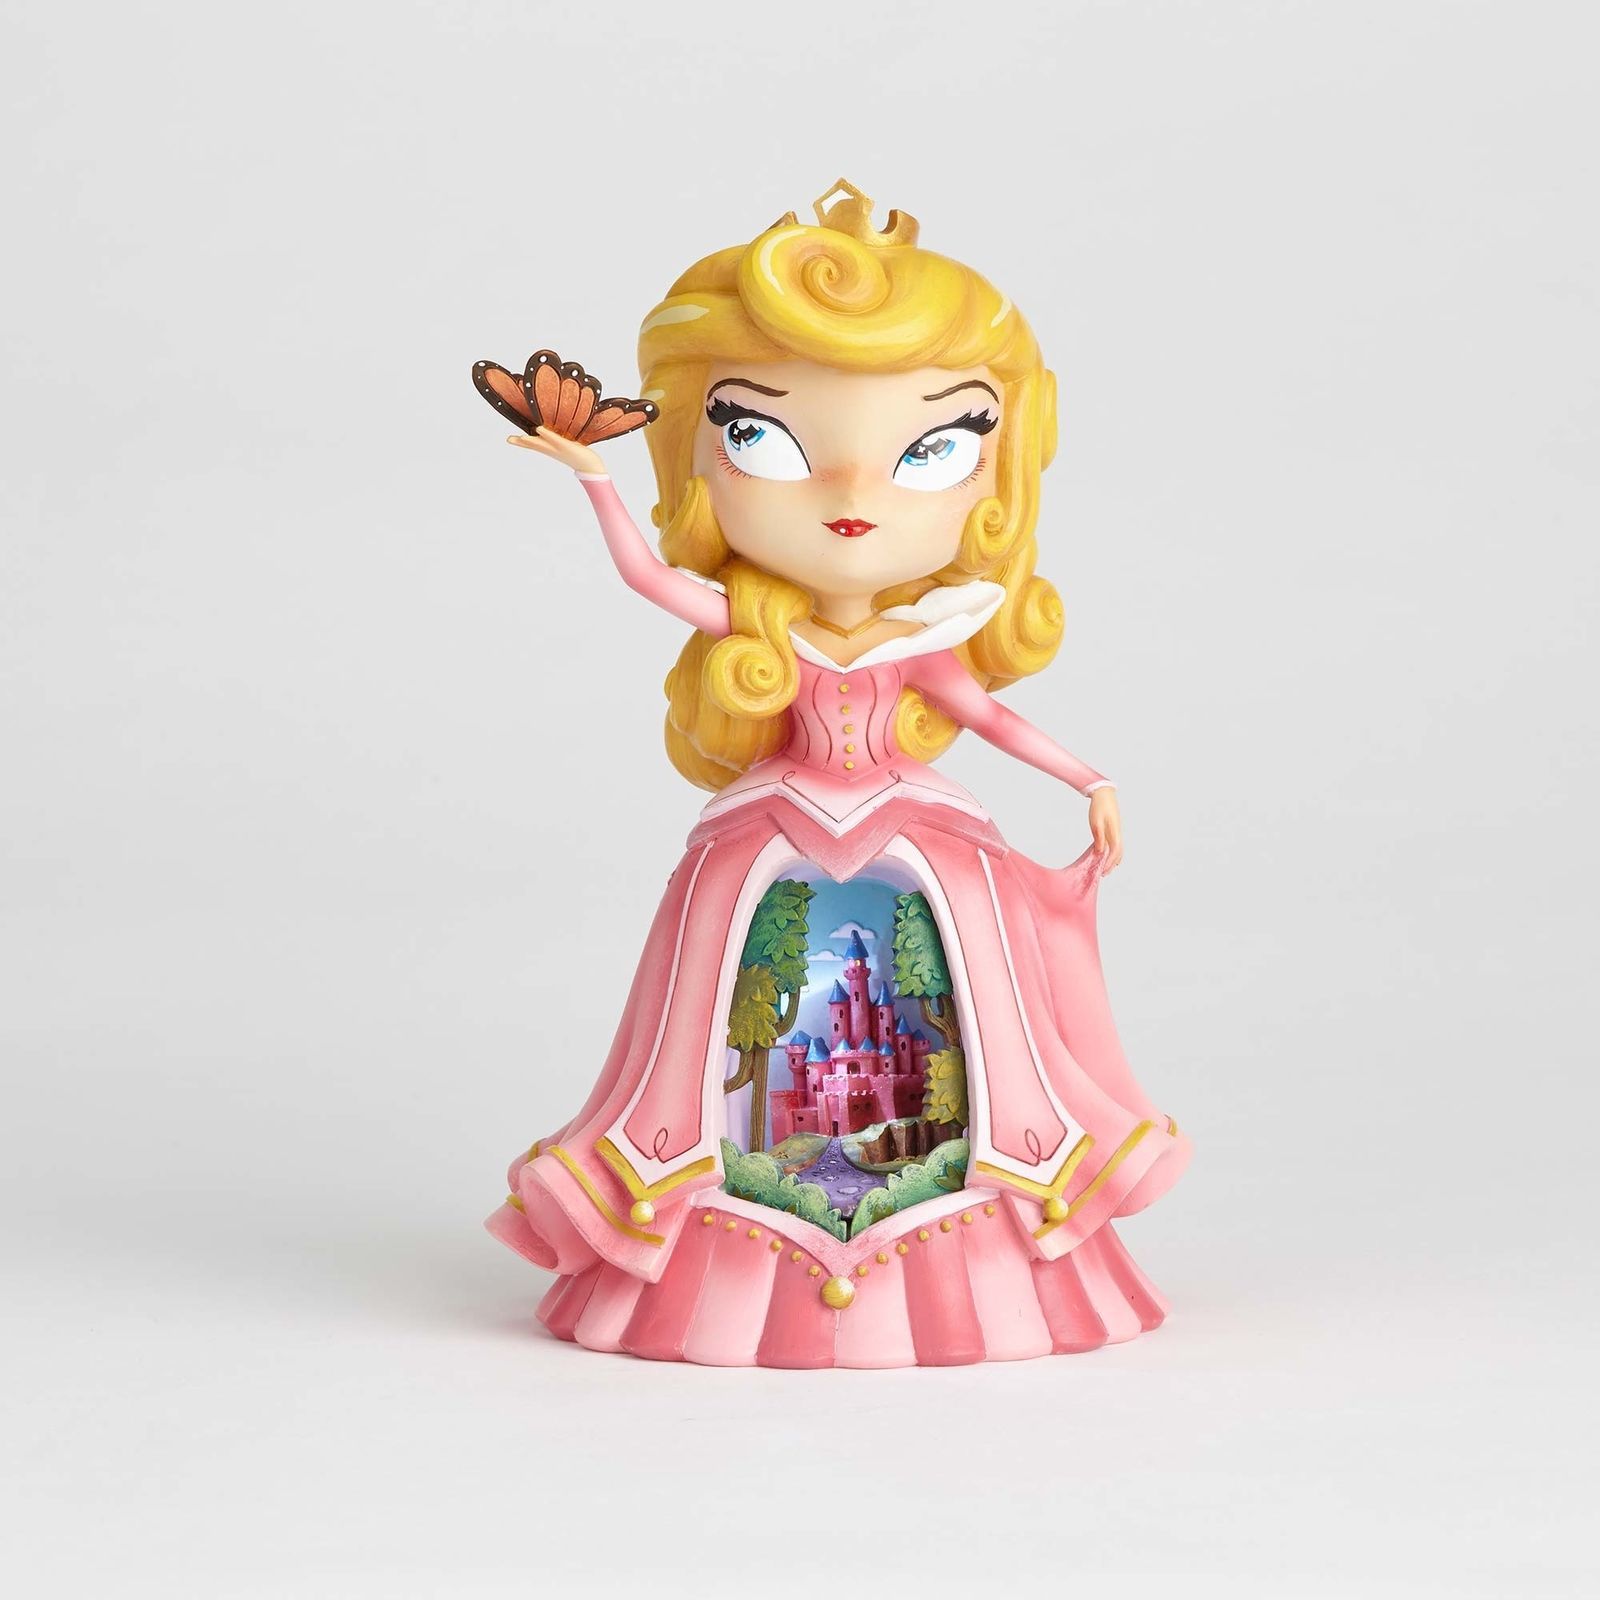 Disney Miss Mindy Aurora with Diorama Dress Light Up Figurine New with Box - $55.97